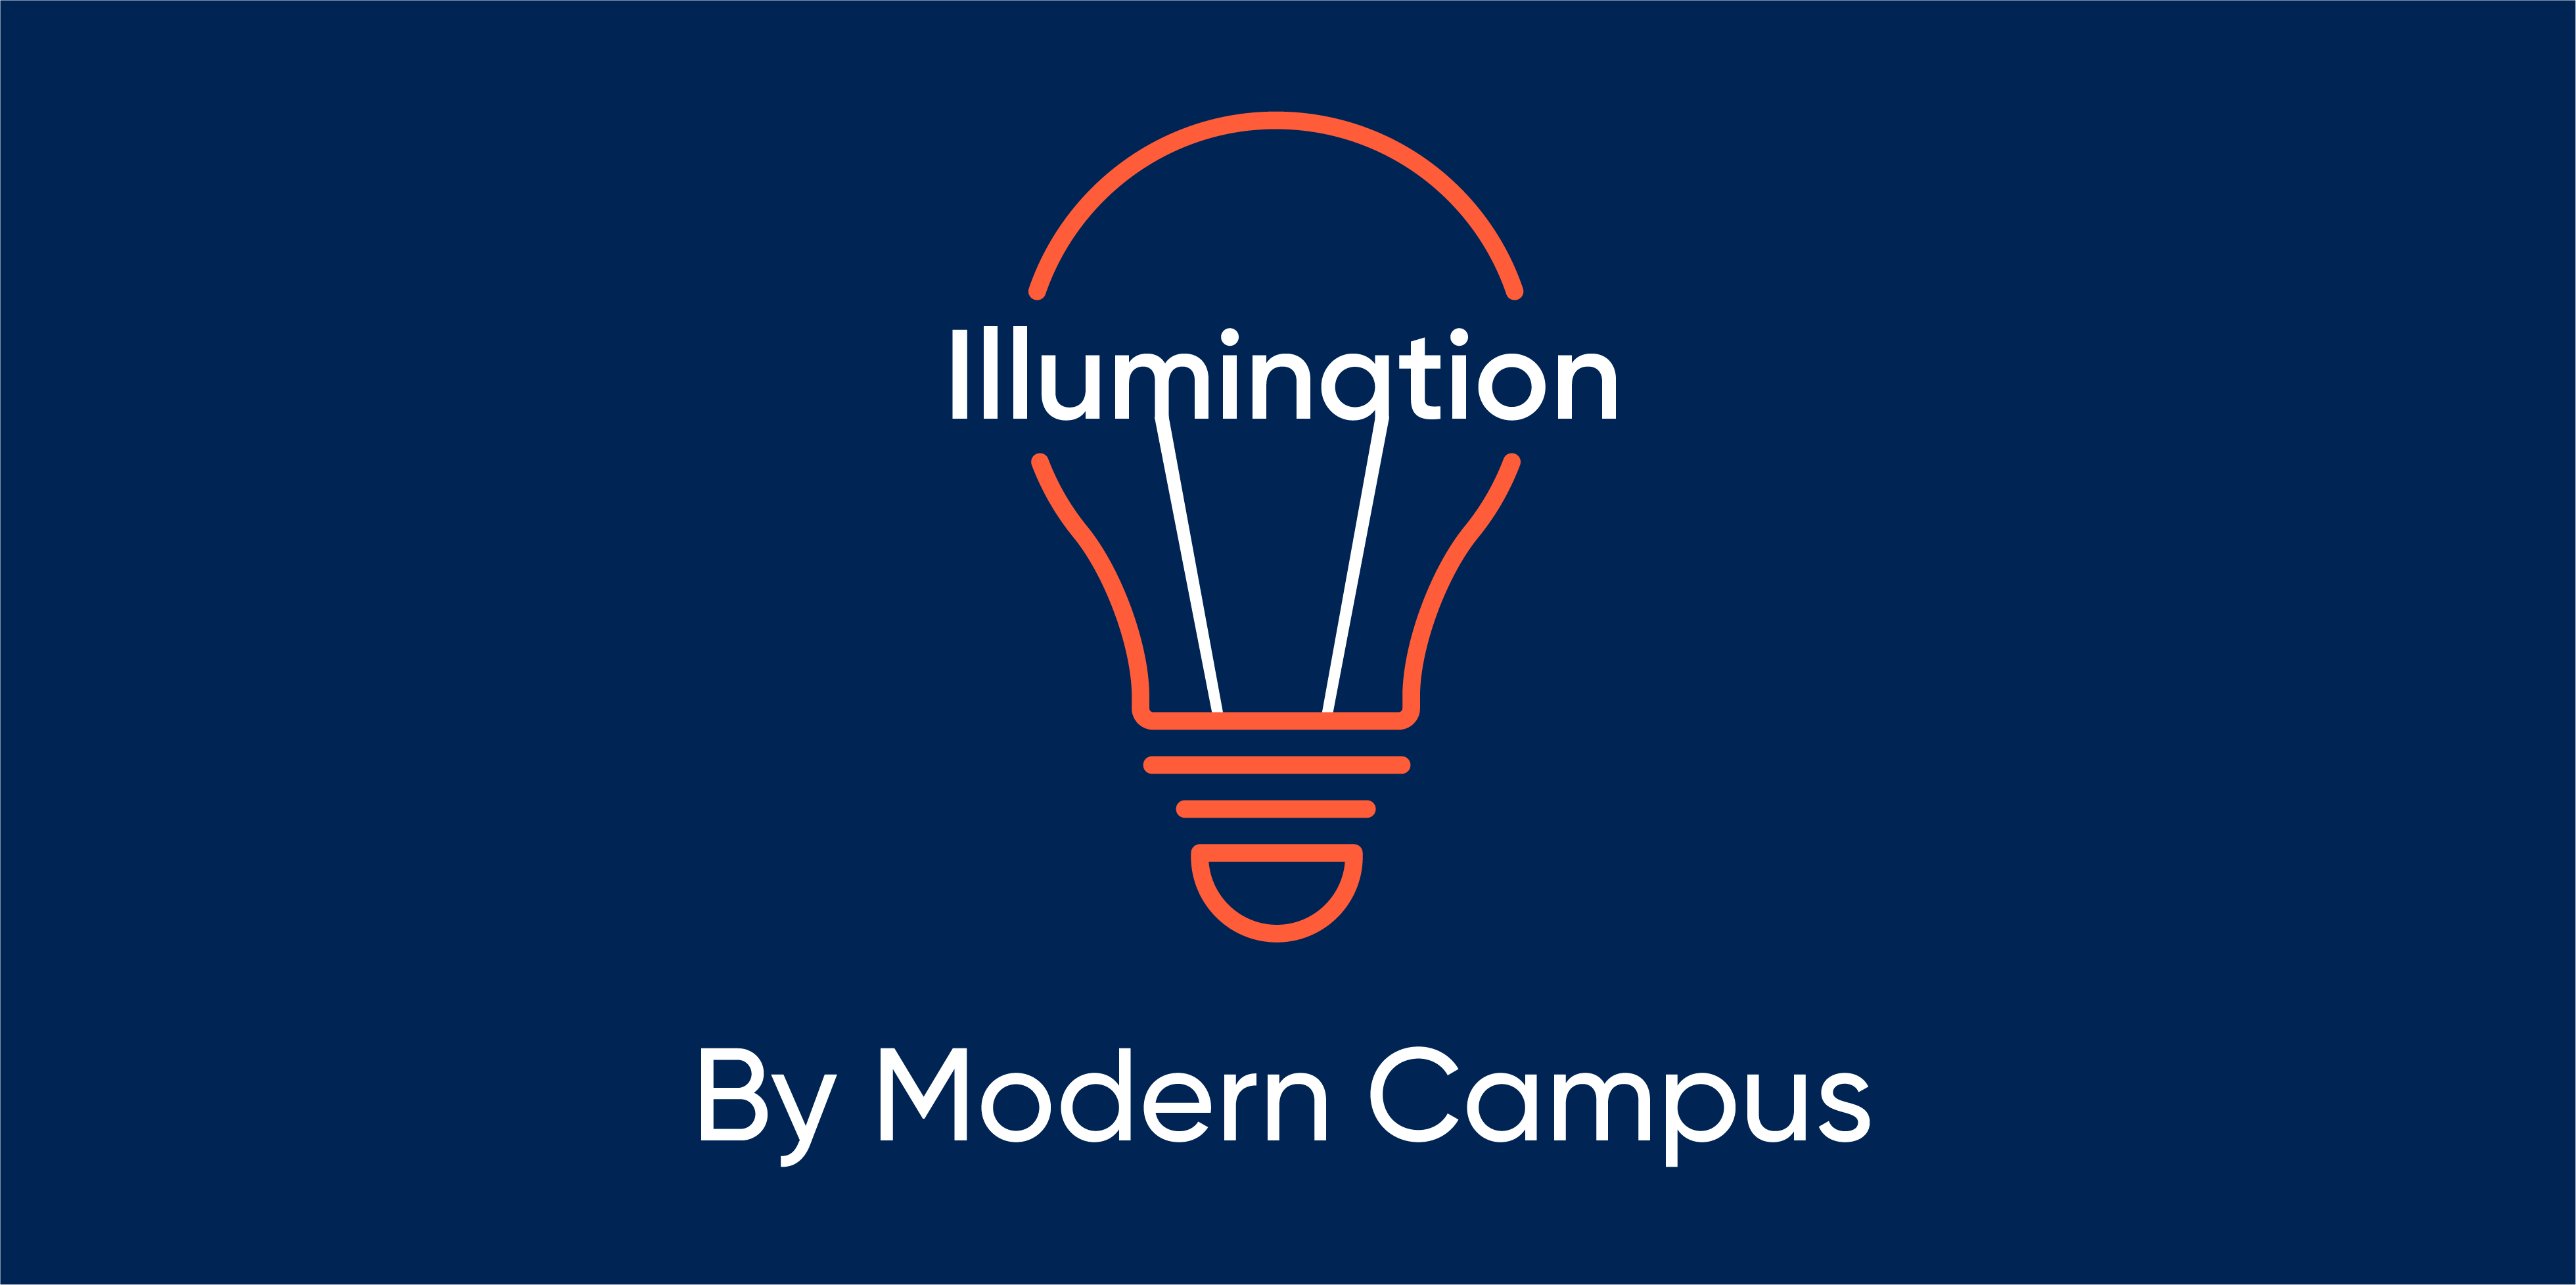 Illumination by Modern Campus